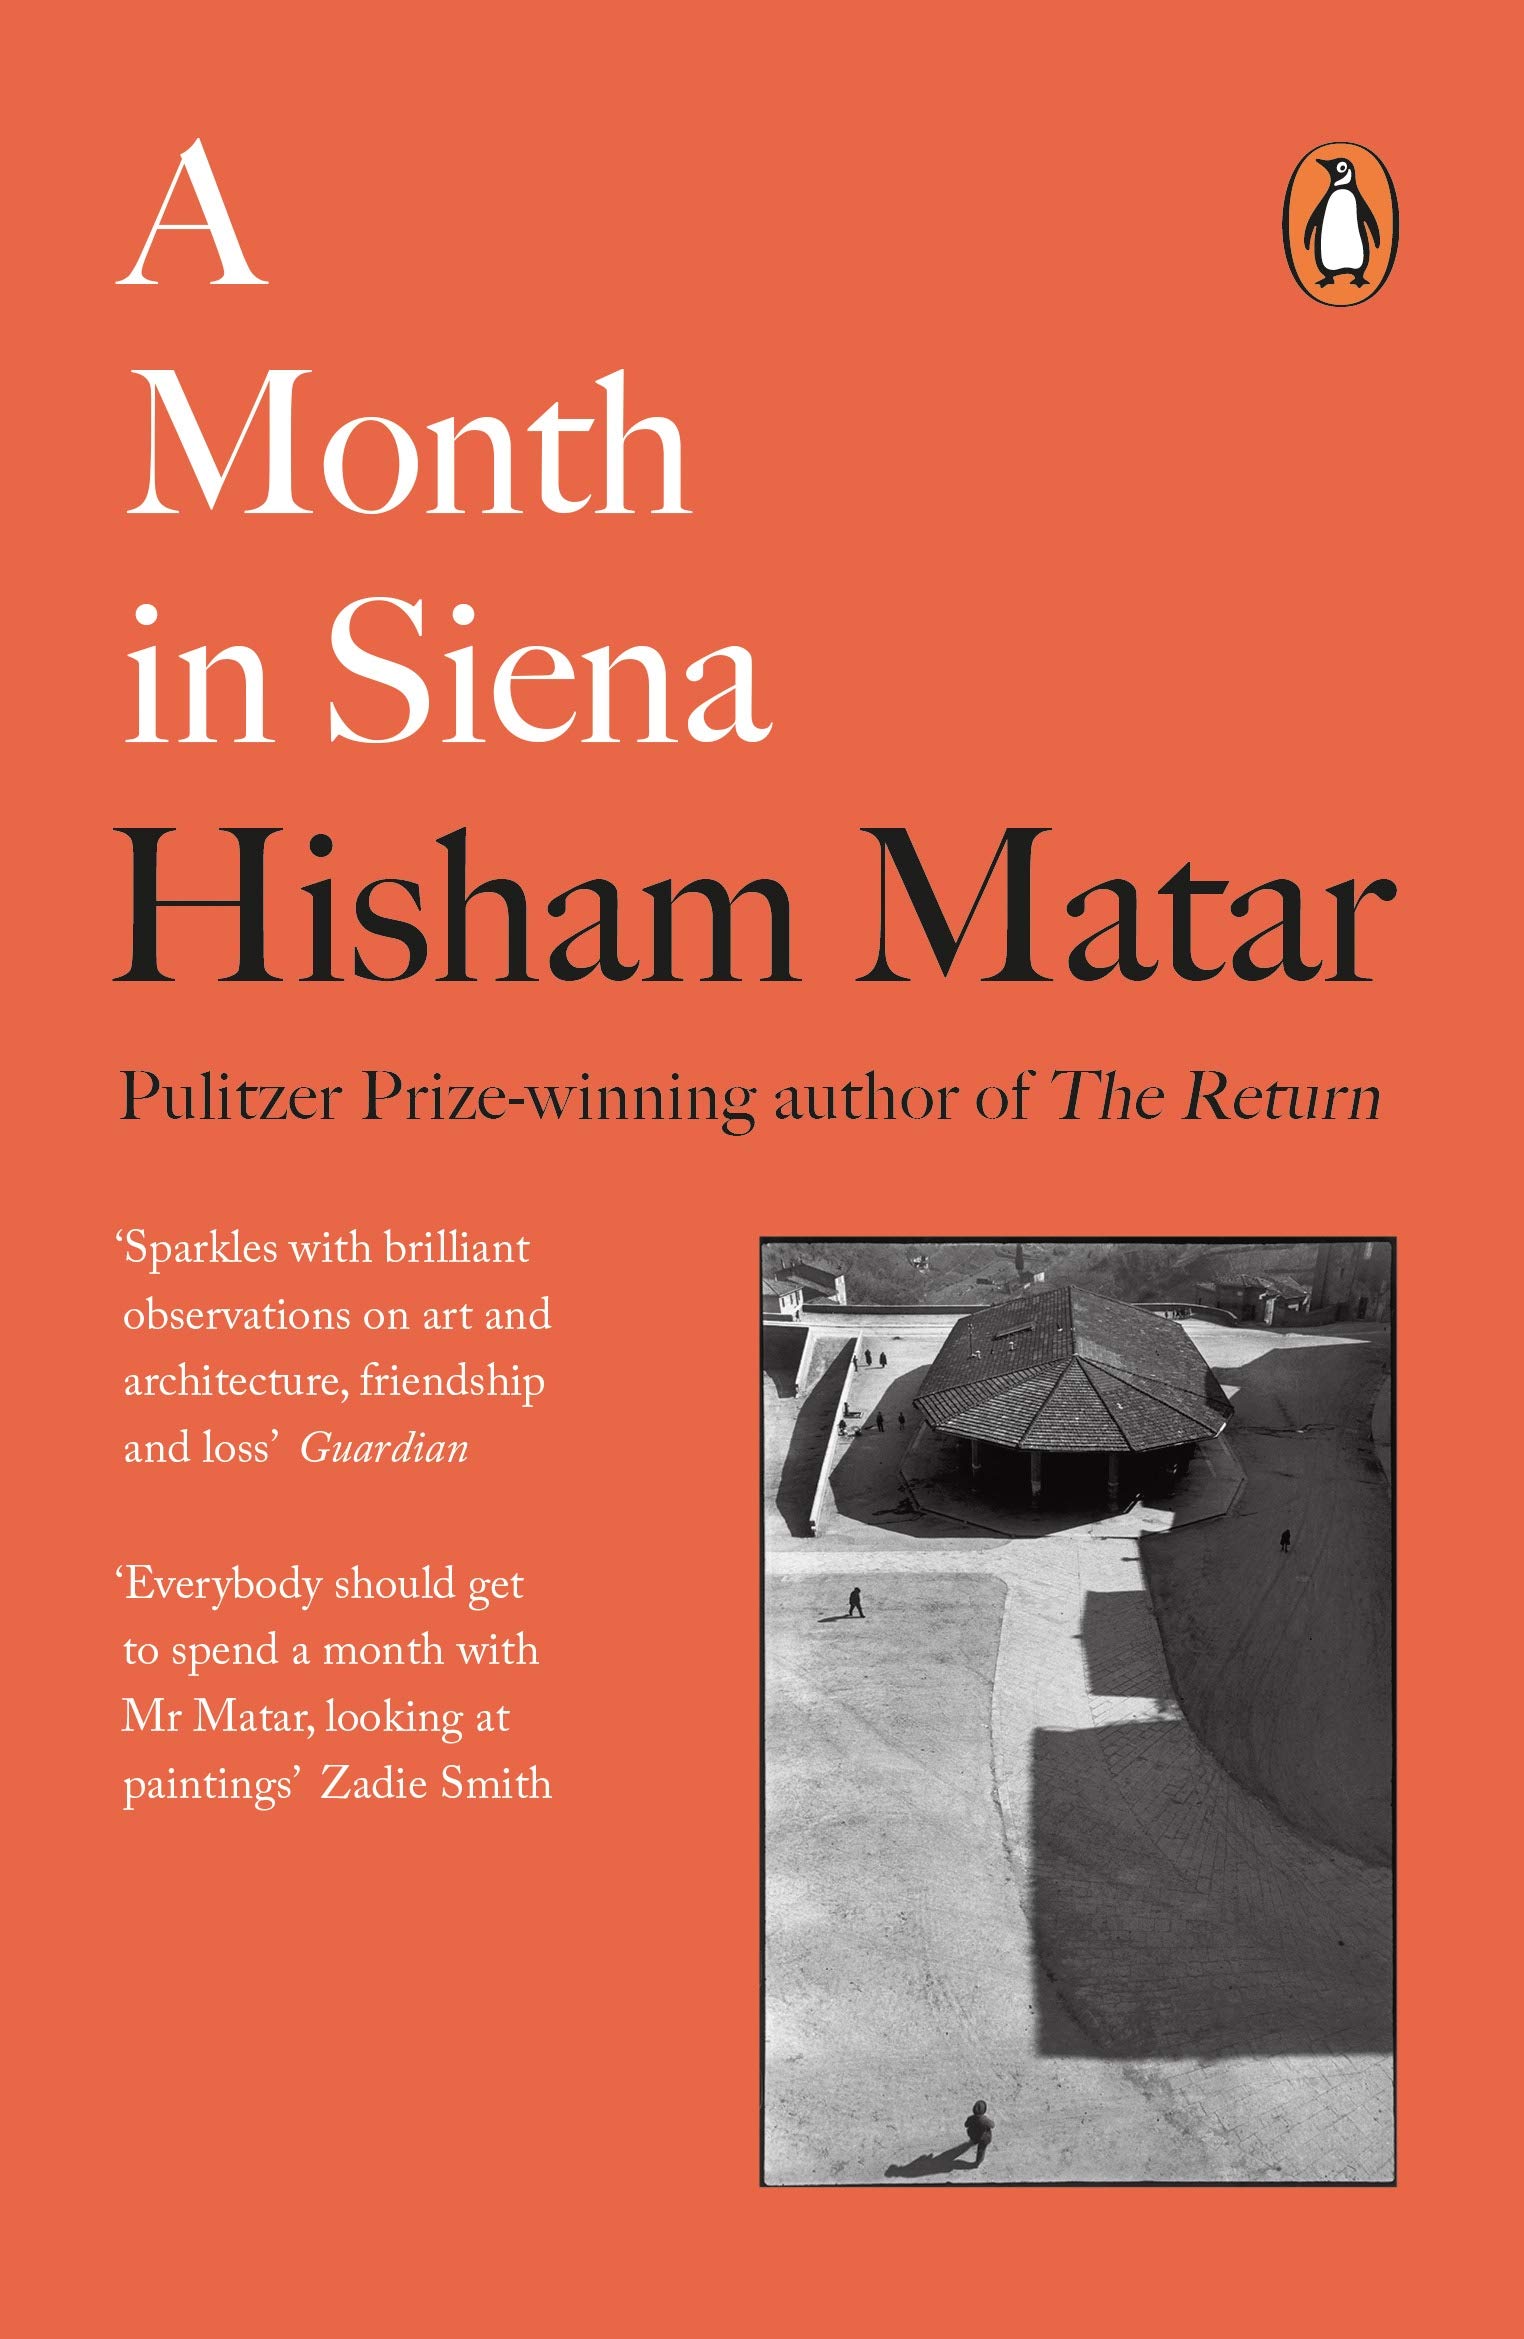 Month in Siena | Hisham Matar